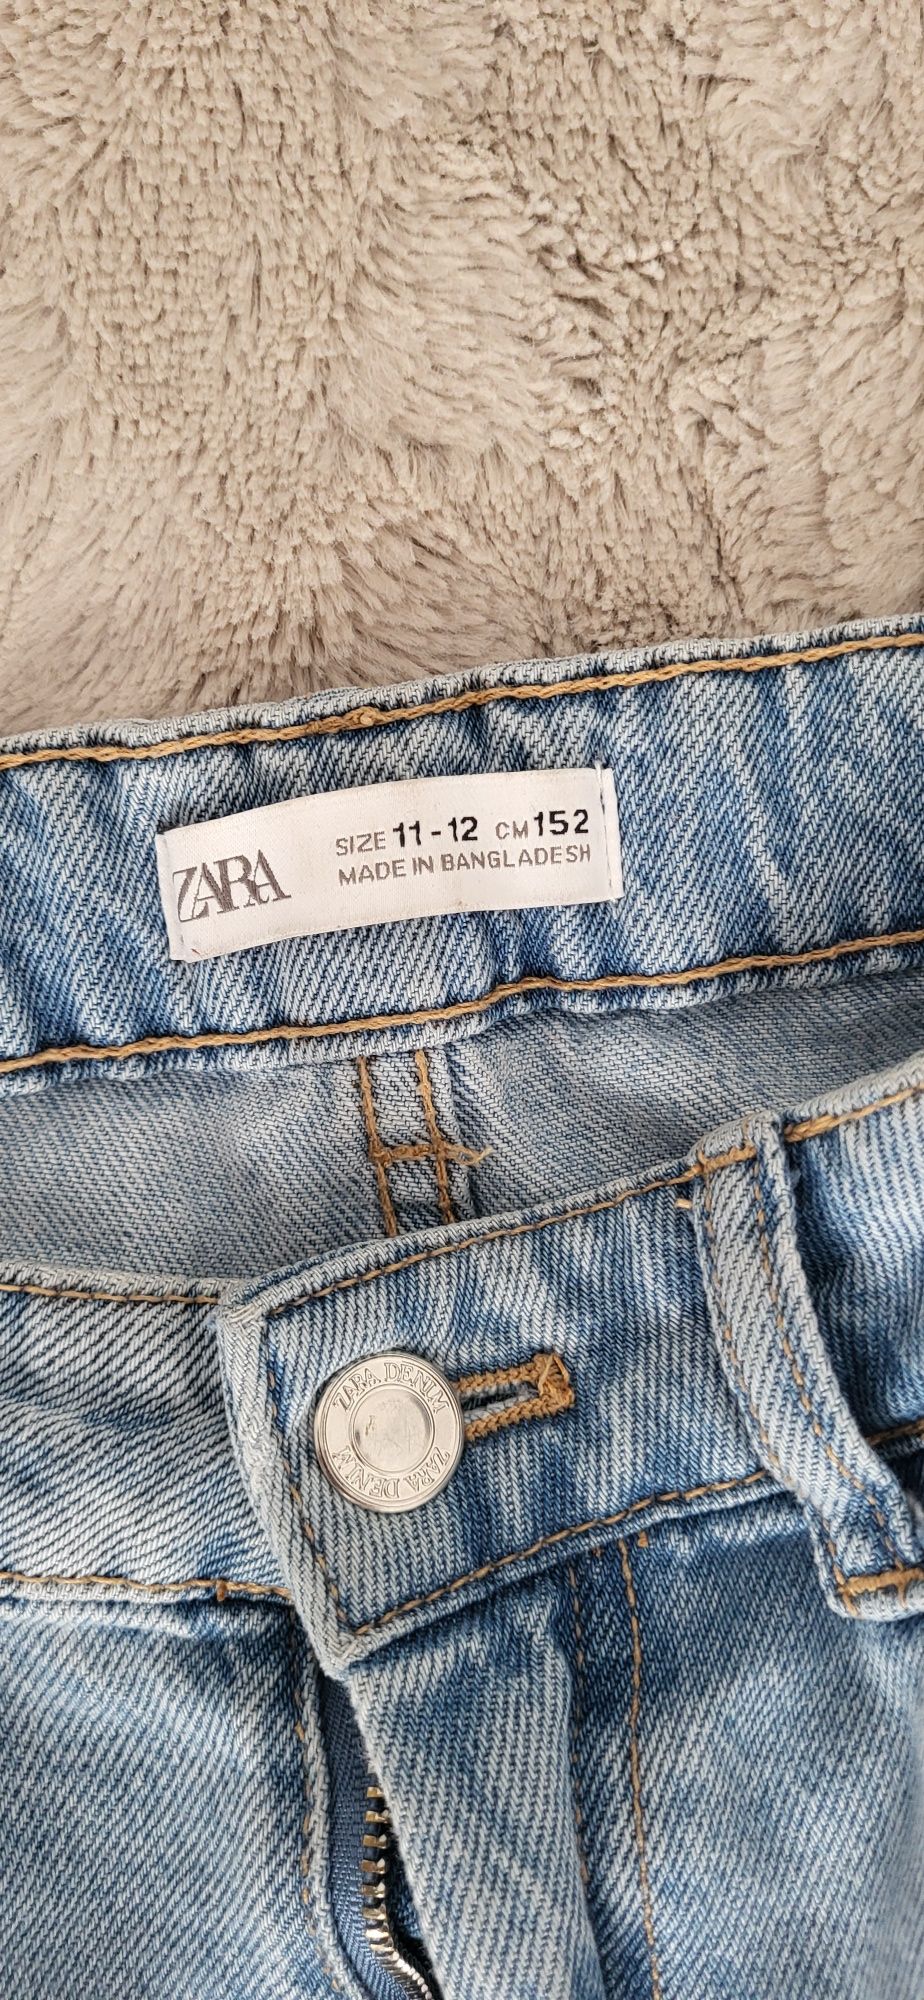 Blugi/Jeans Zara + tricou Cadou